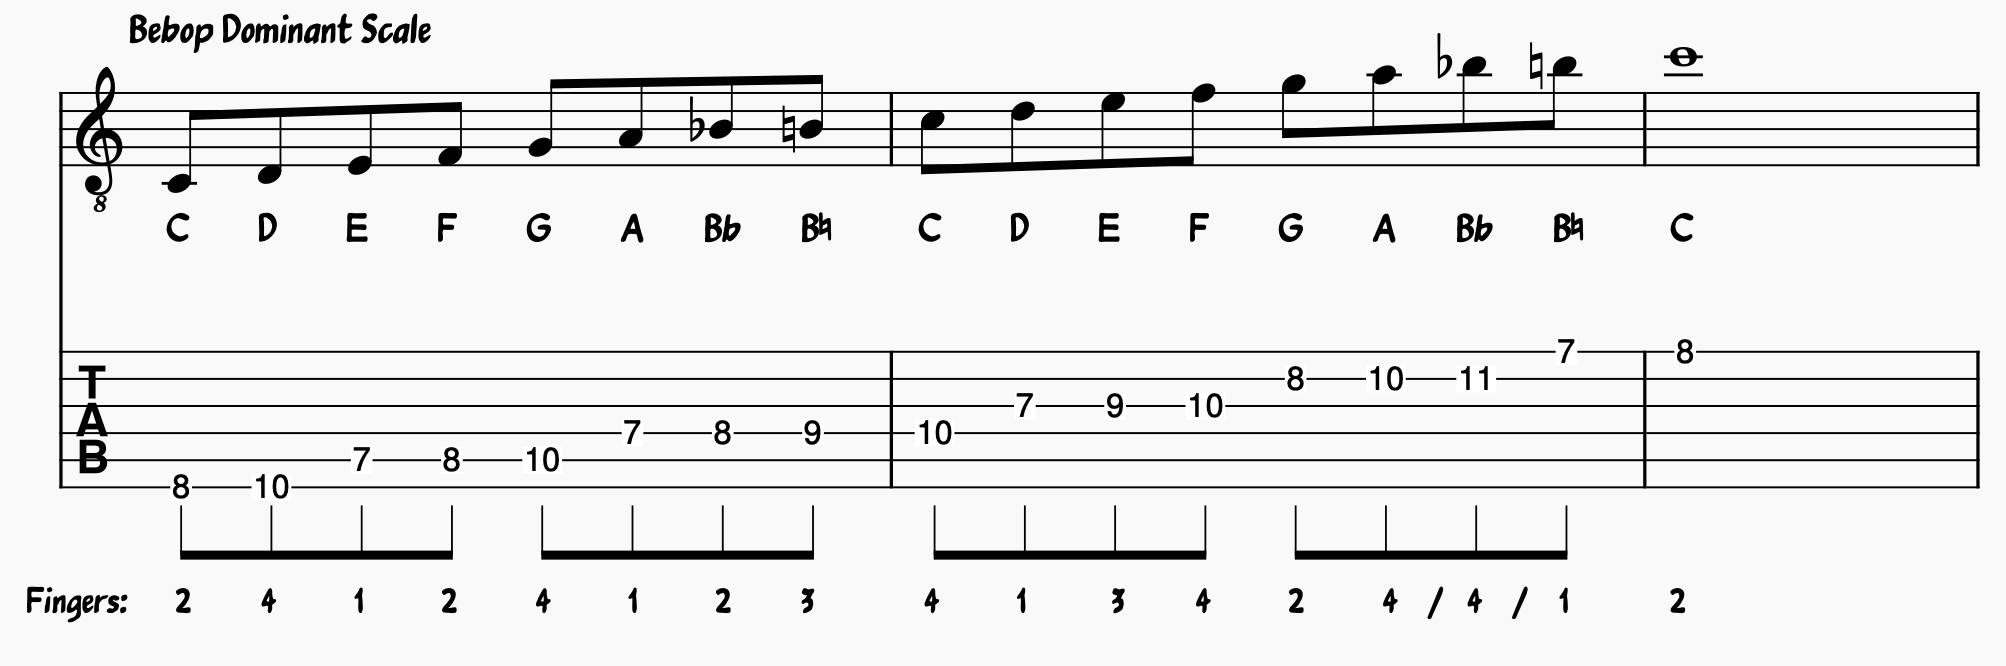 Bebop Dominant Scale on guitar